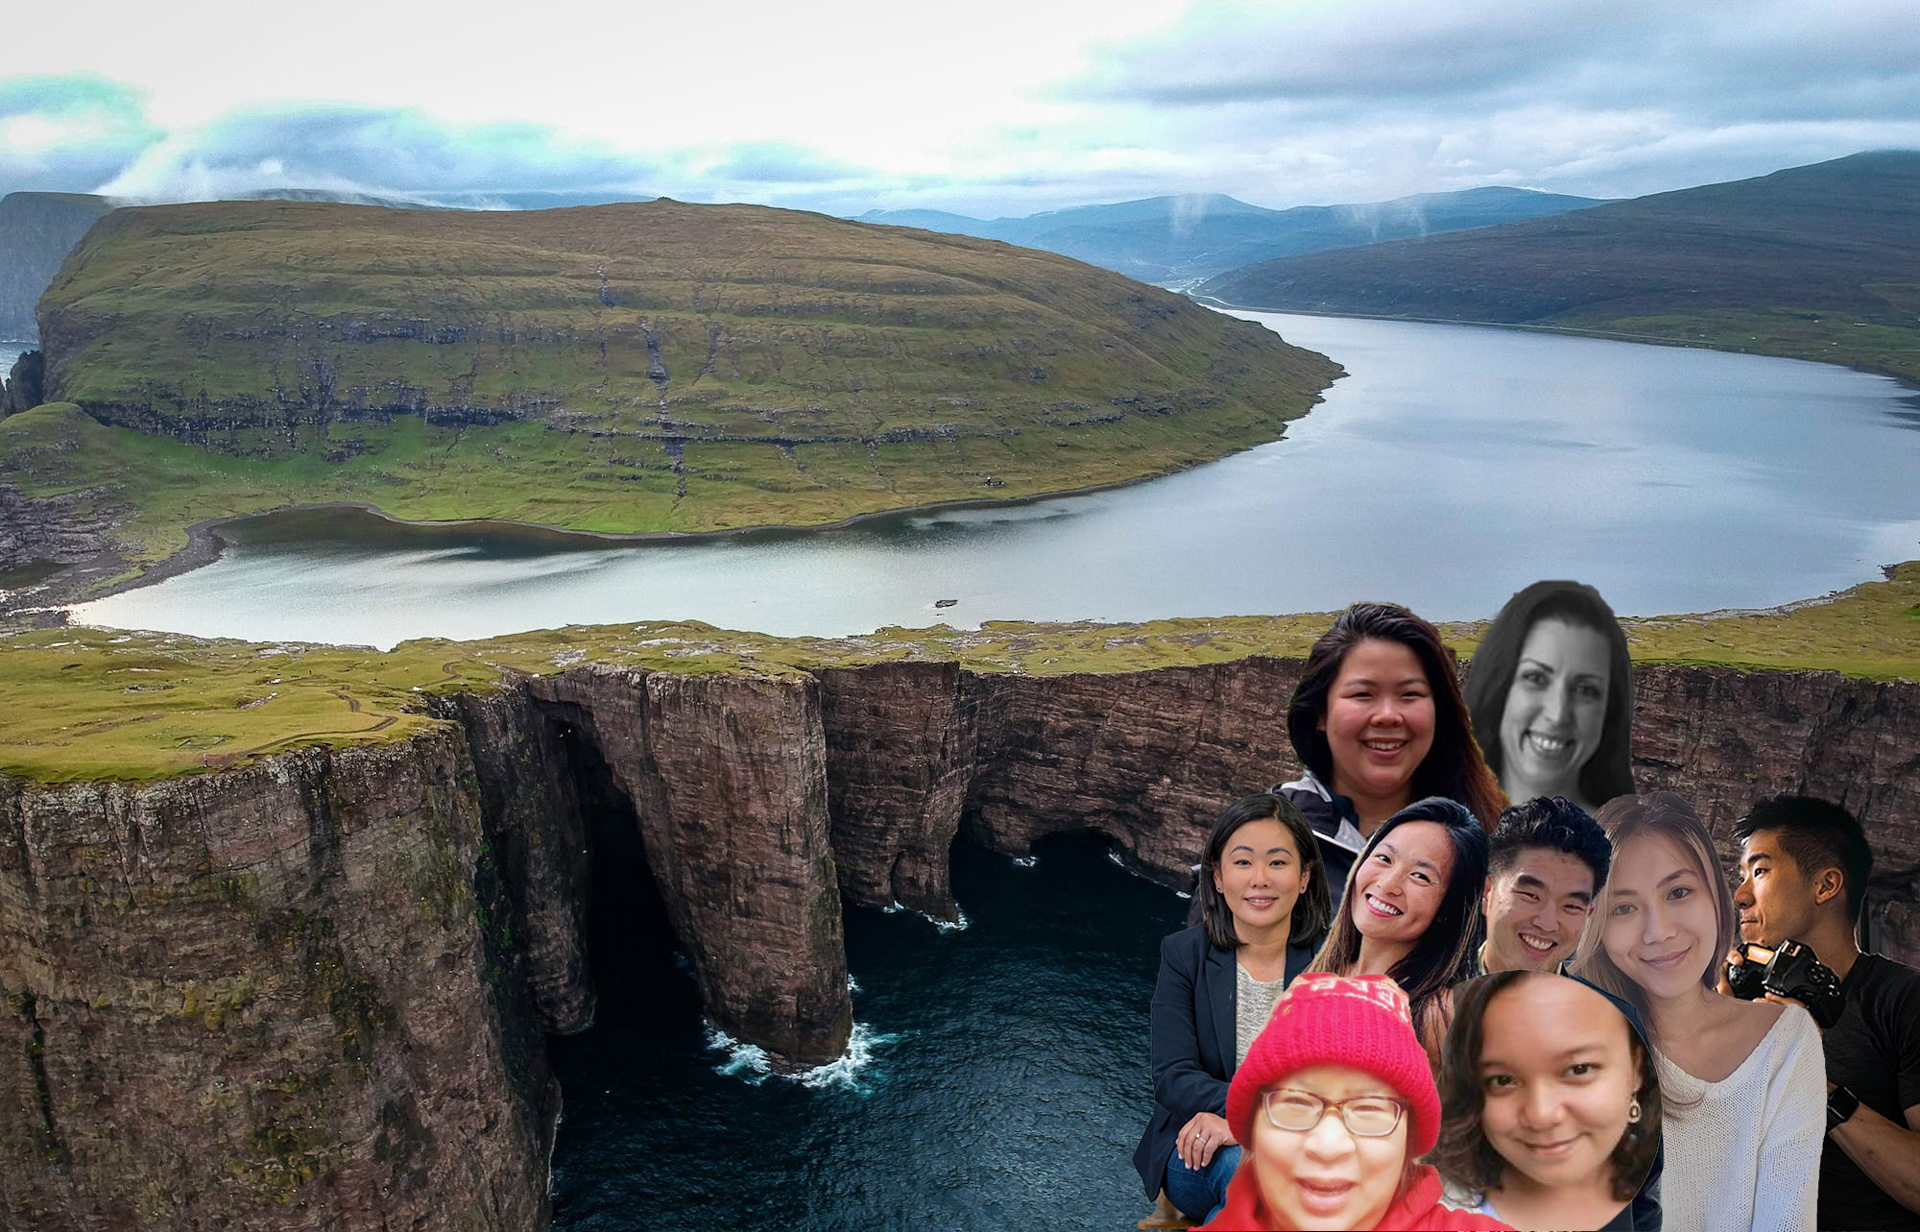 Meet the Faroese!